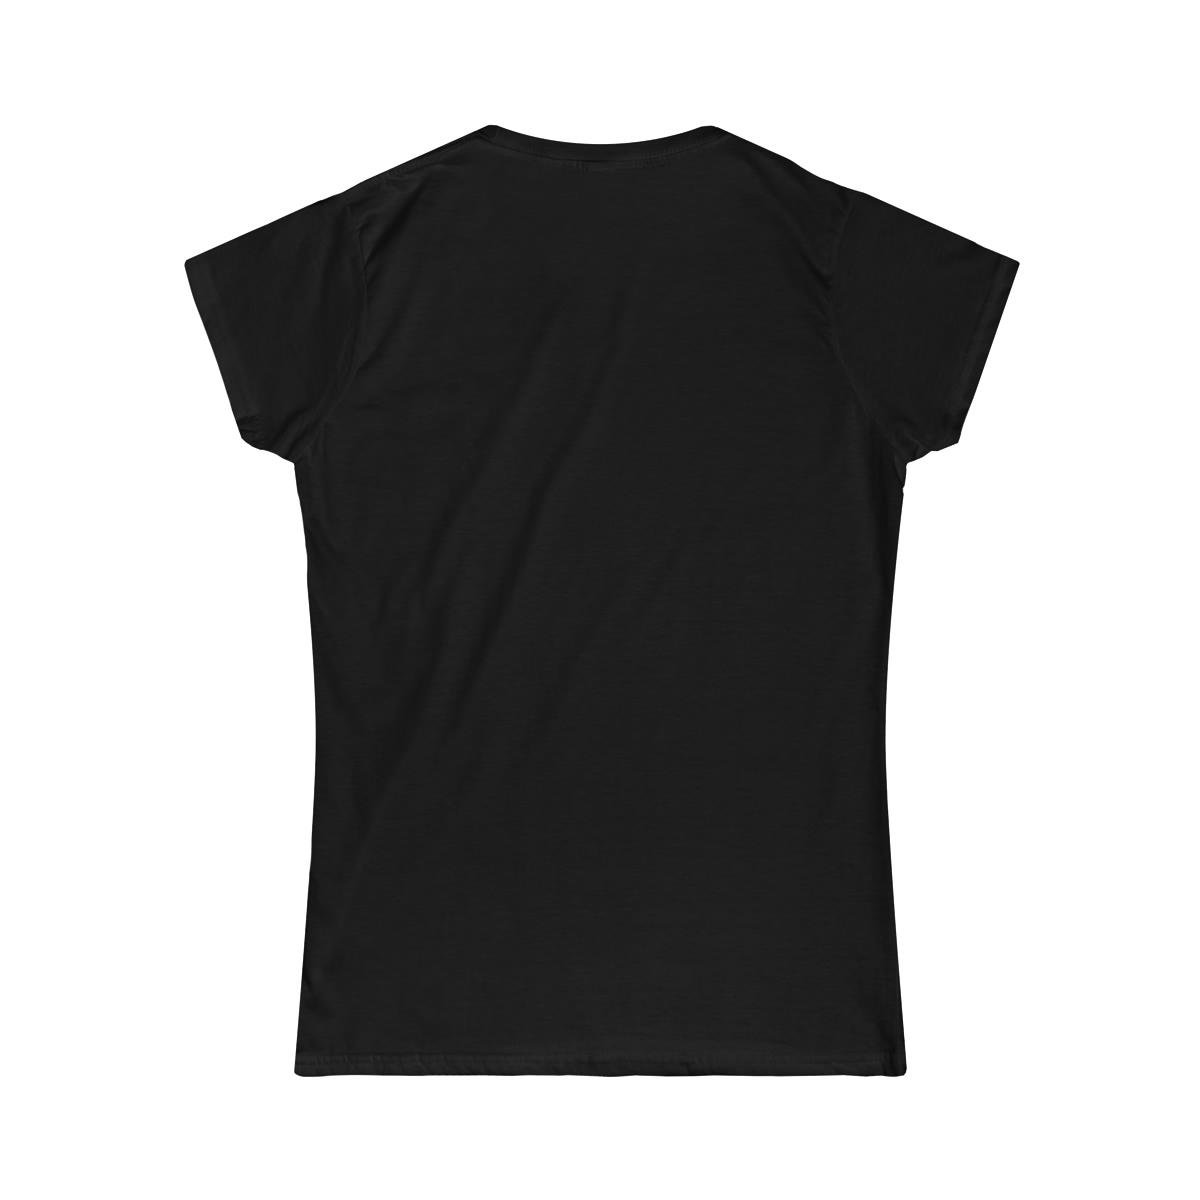 Craig Phillips – Short Supply Women’s Short Sleeve Tshirt